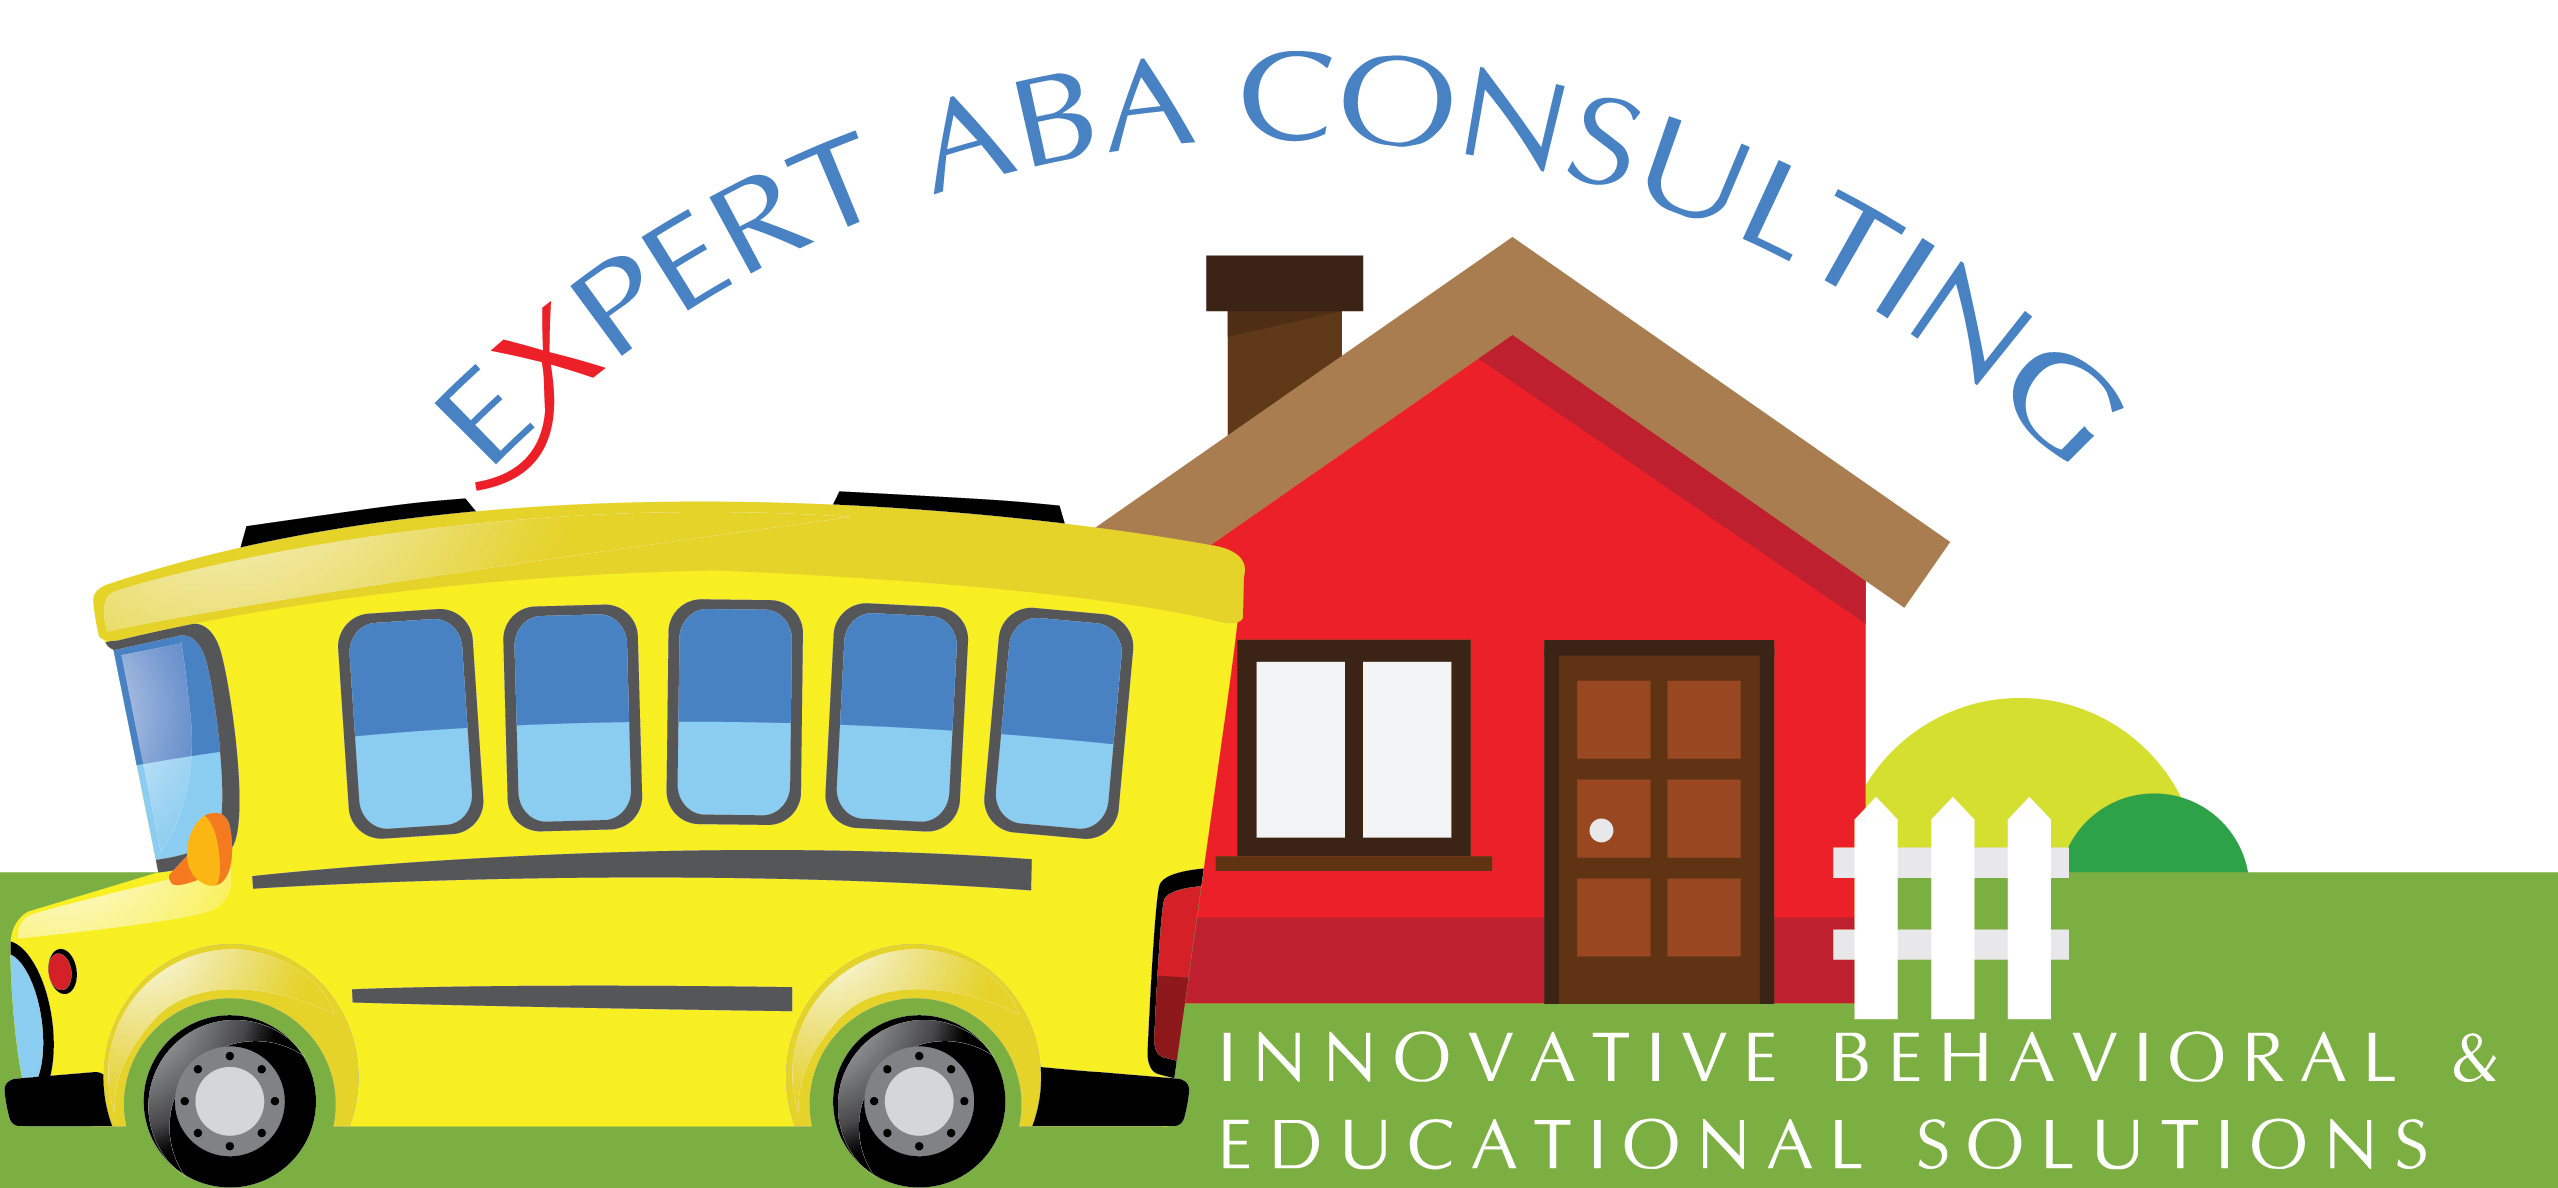 EXPERT ABA CONSULTING, LLC